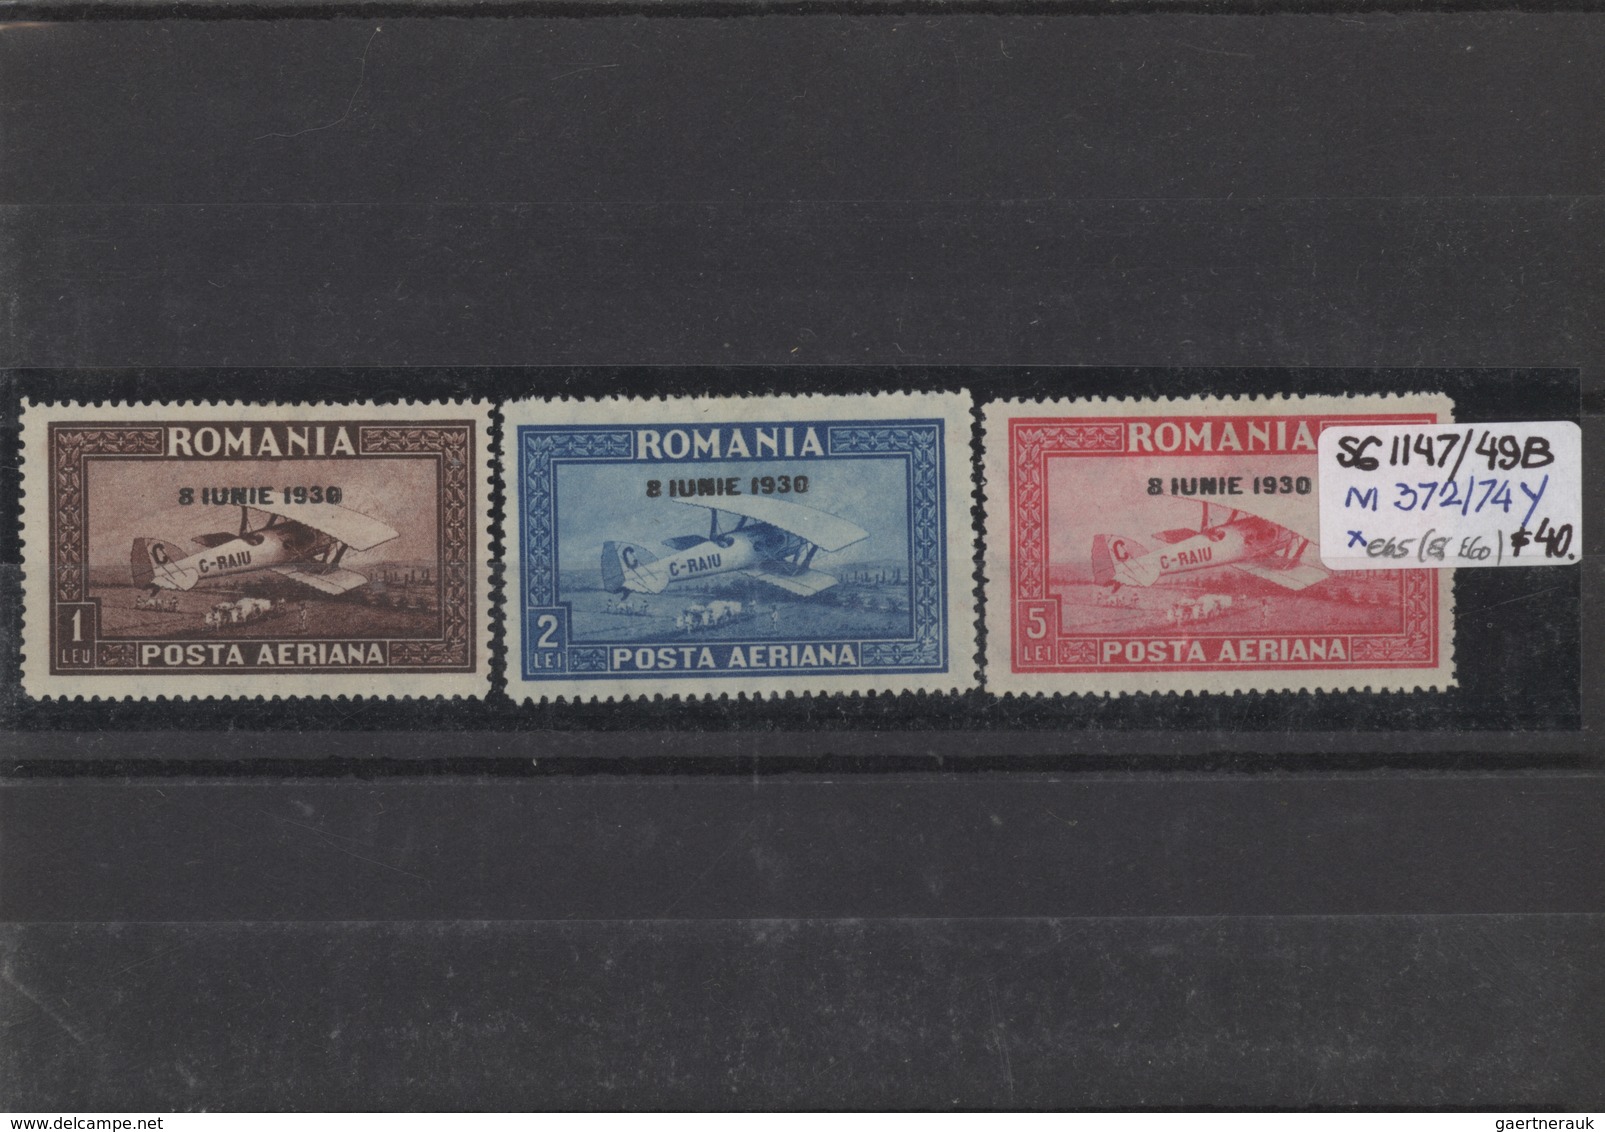 Rumänien: 1862/2000, comprehensive holding on stockcards in three small binders plus one stockbook,